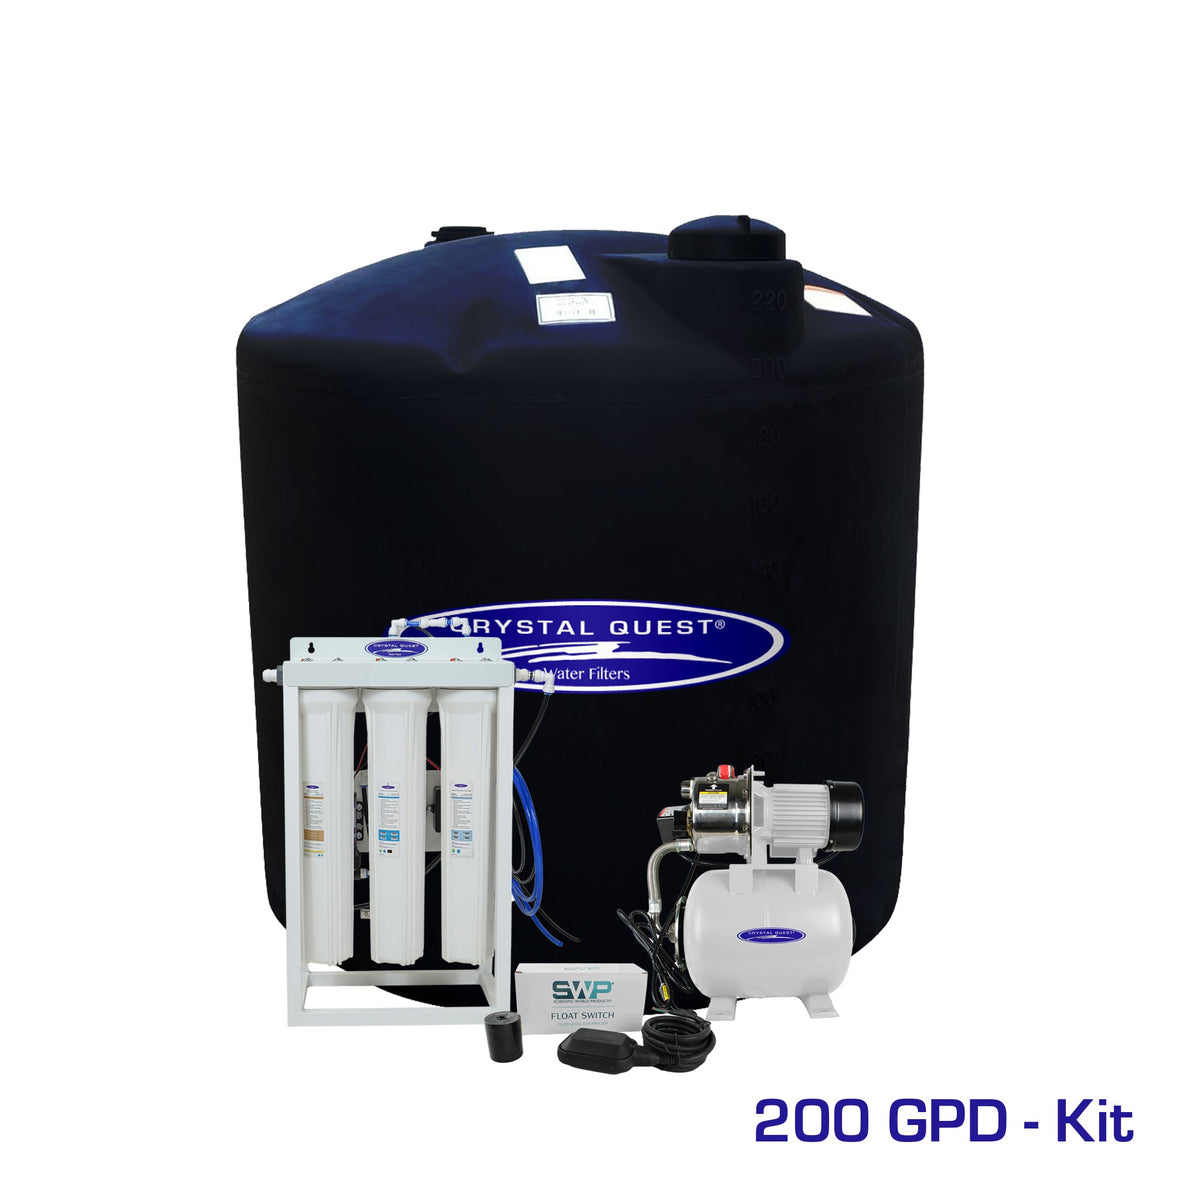 200 GPD / Add Storage Tank Kit (220 Gal) Whole House Reverse Osmosis System - Reverse Osmosis System - Crystal Quest